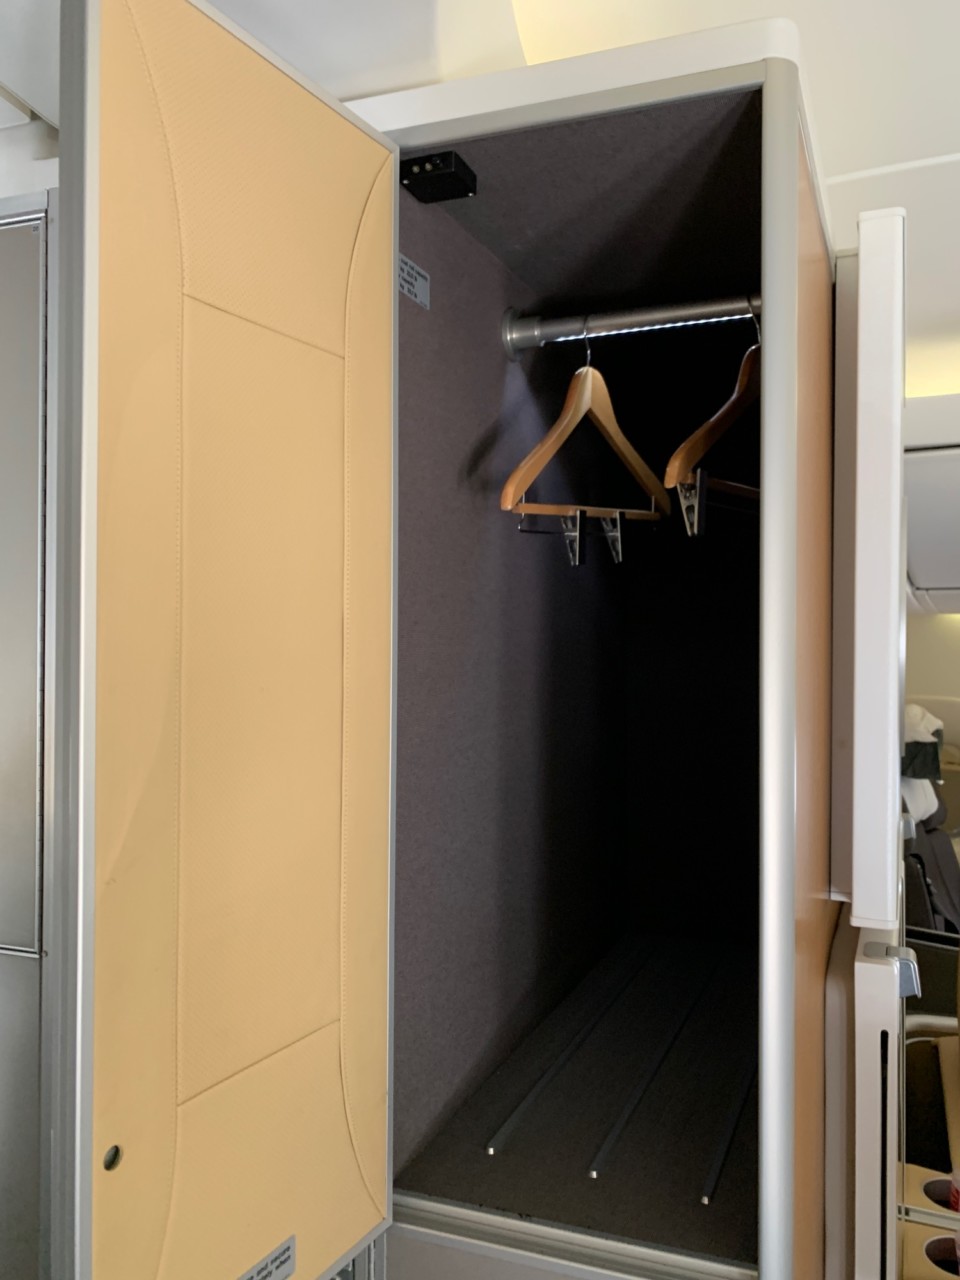 Lufthansa First Class personal storage closet